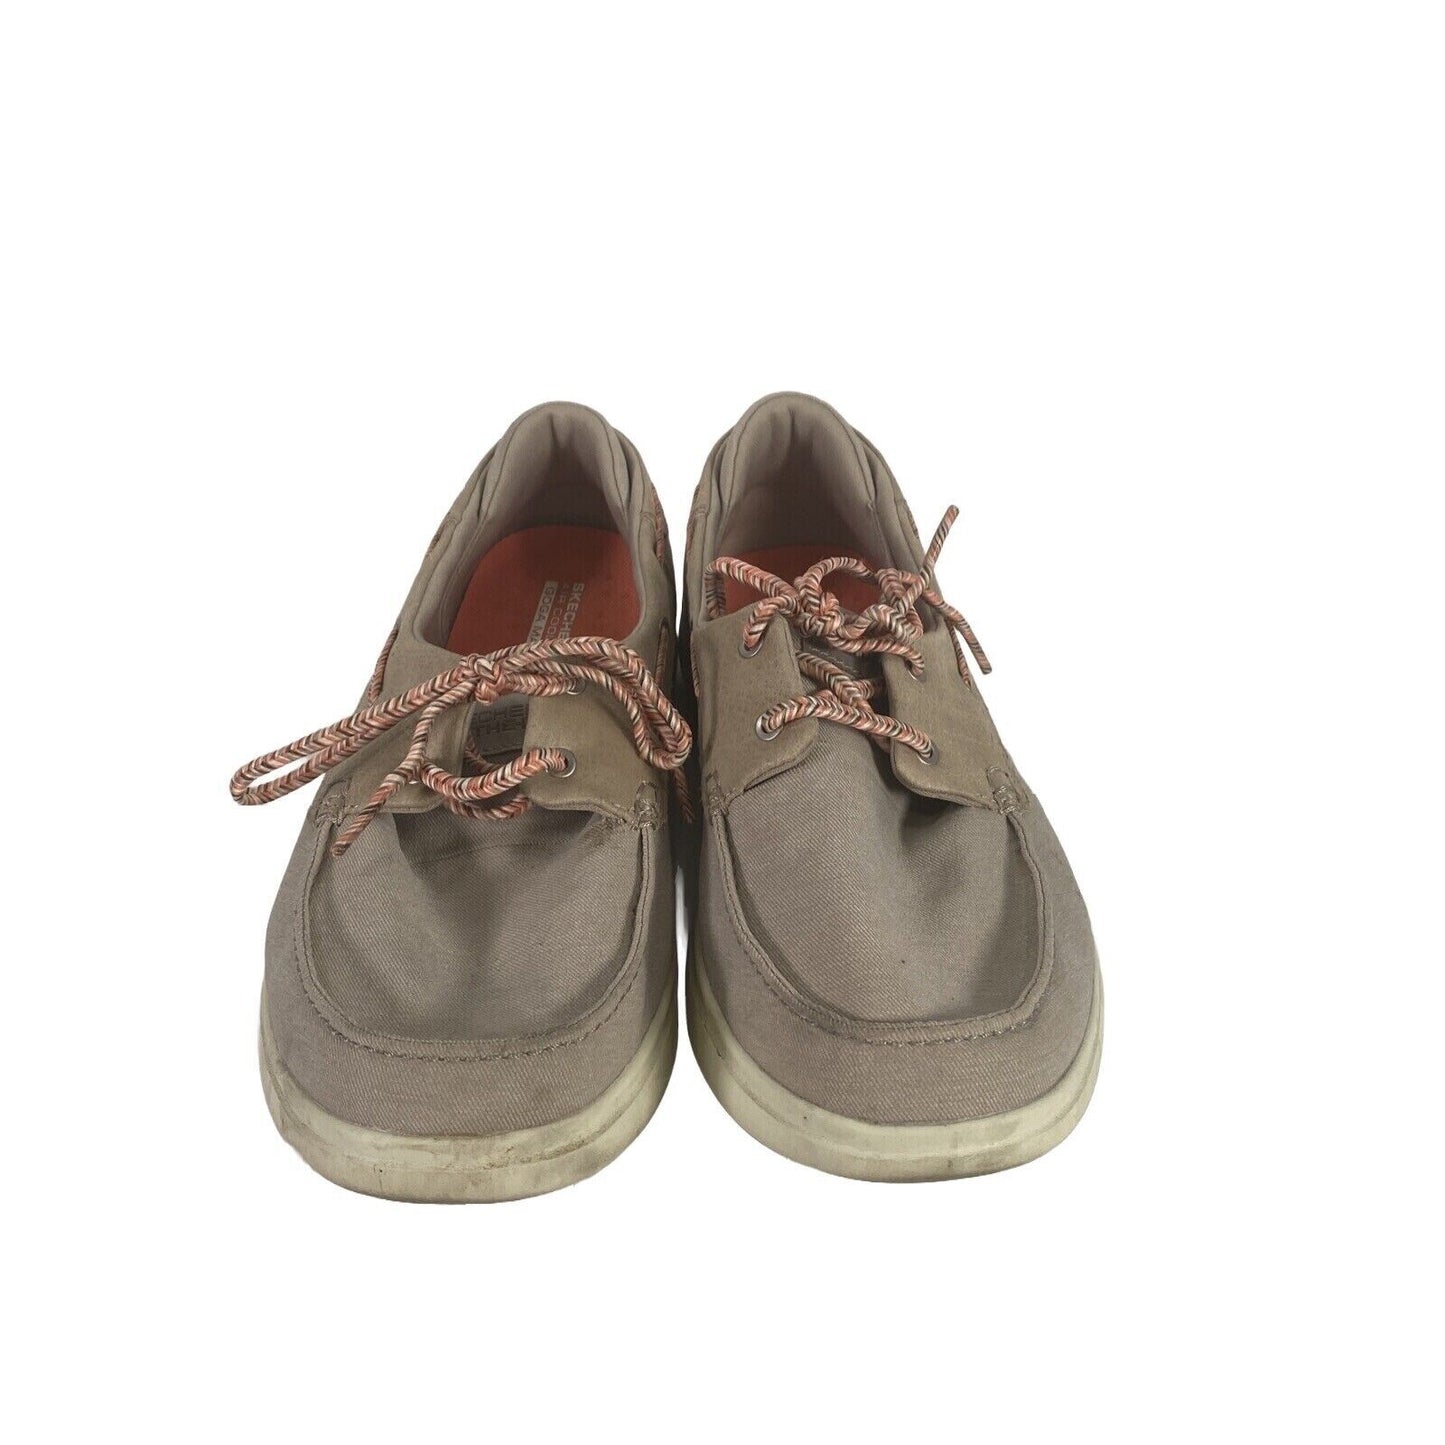 Skechers Women's Gray Fabric Glide Ultra Playa Boat Shoes - 6